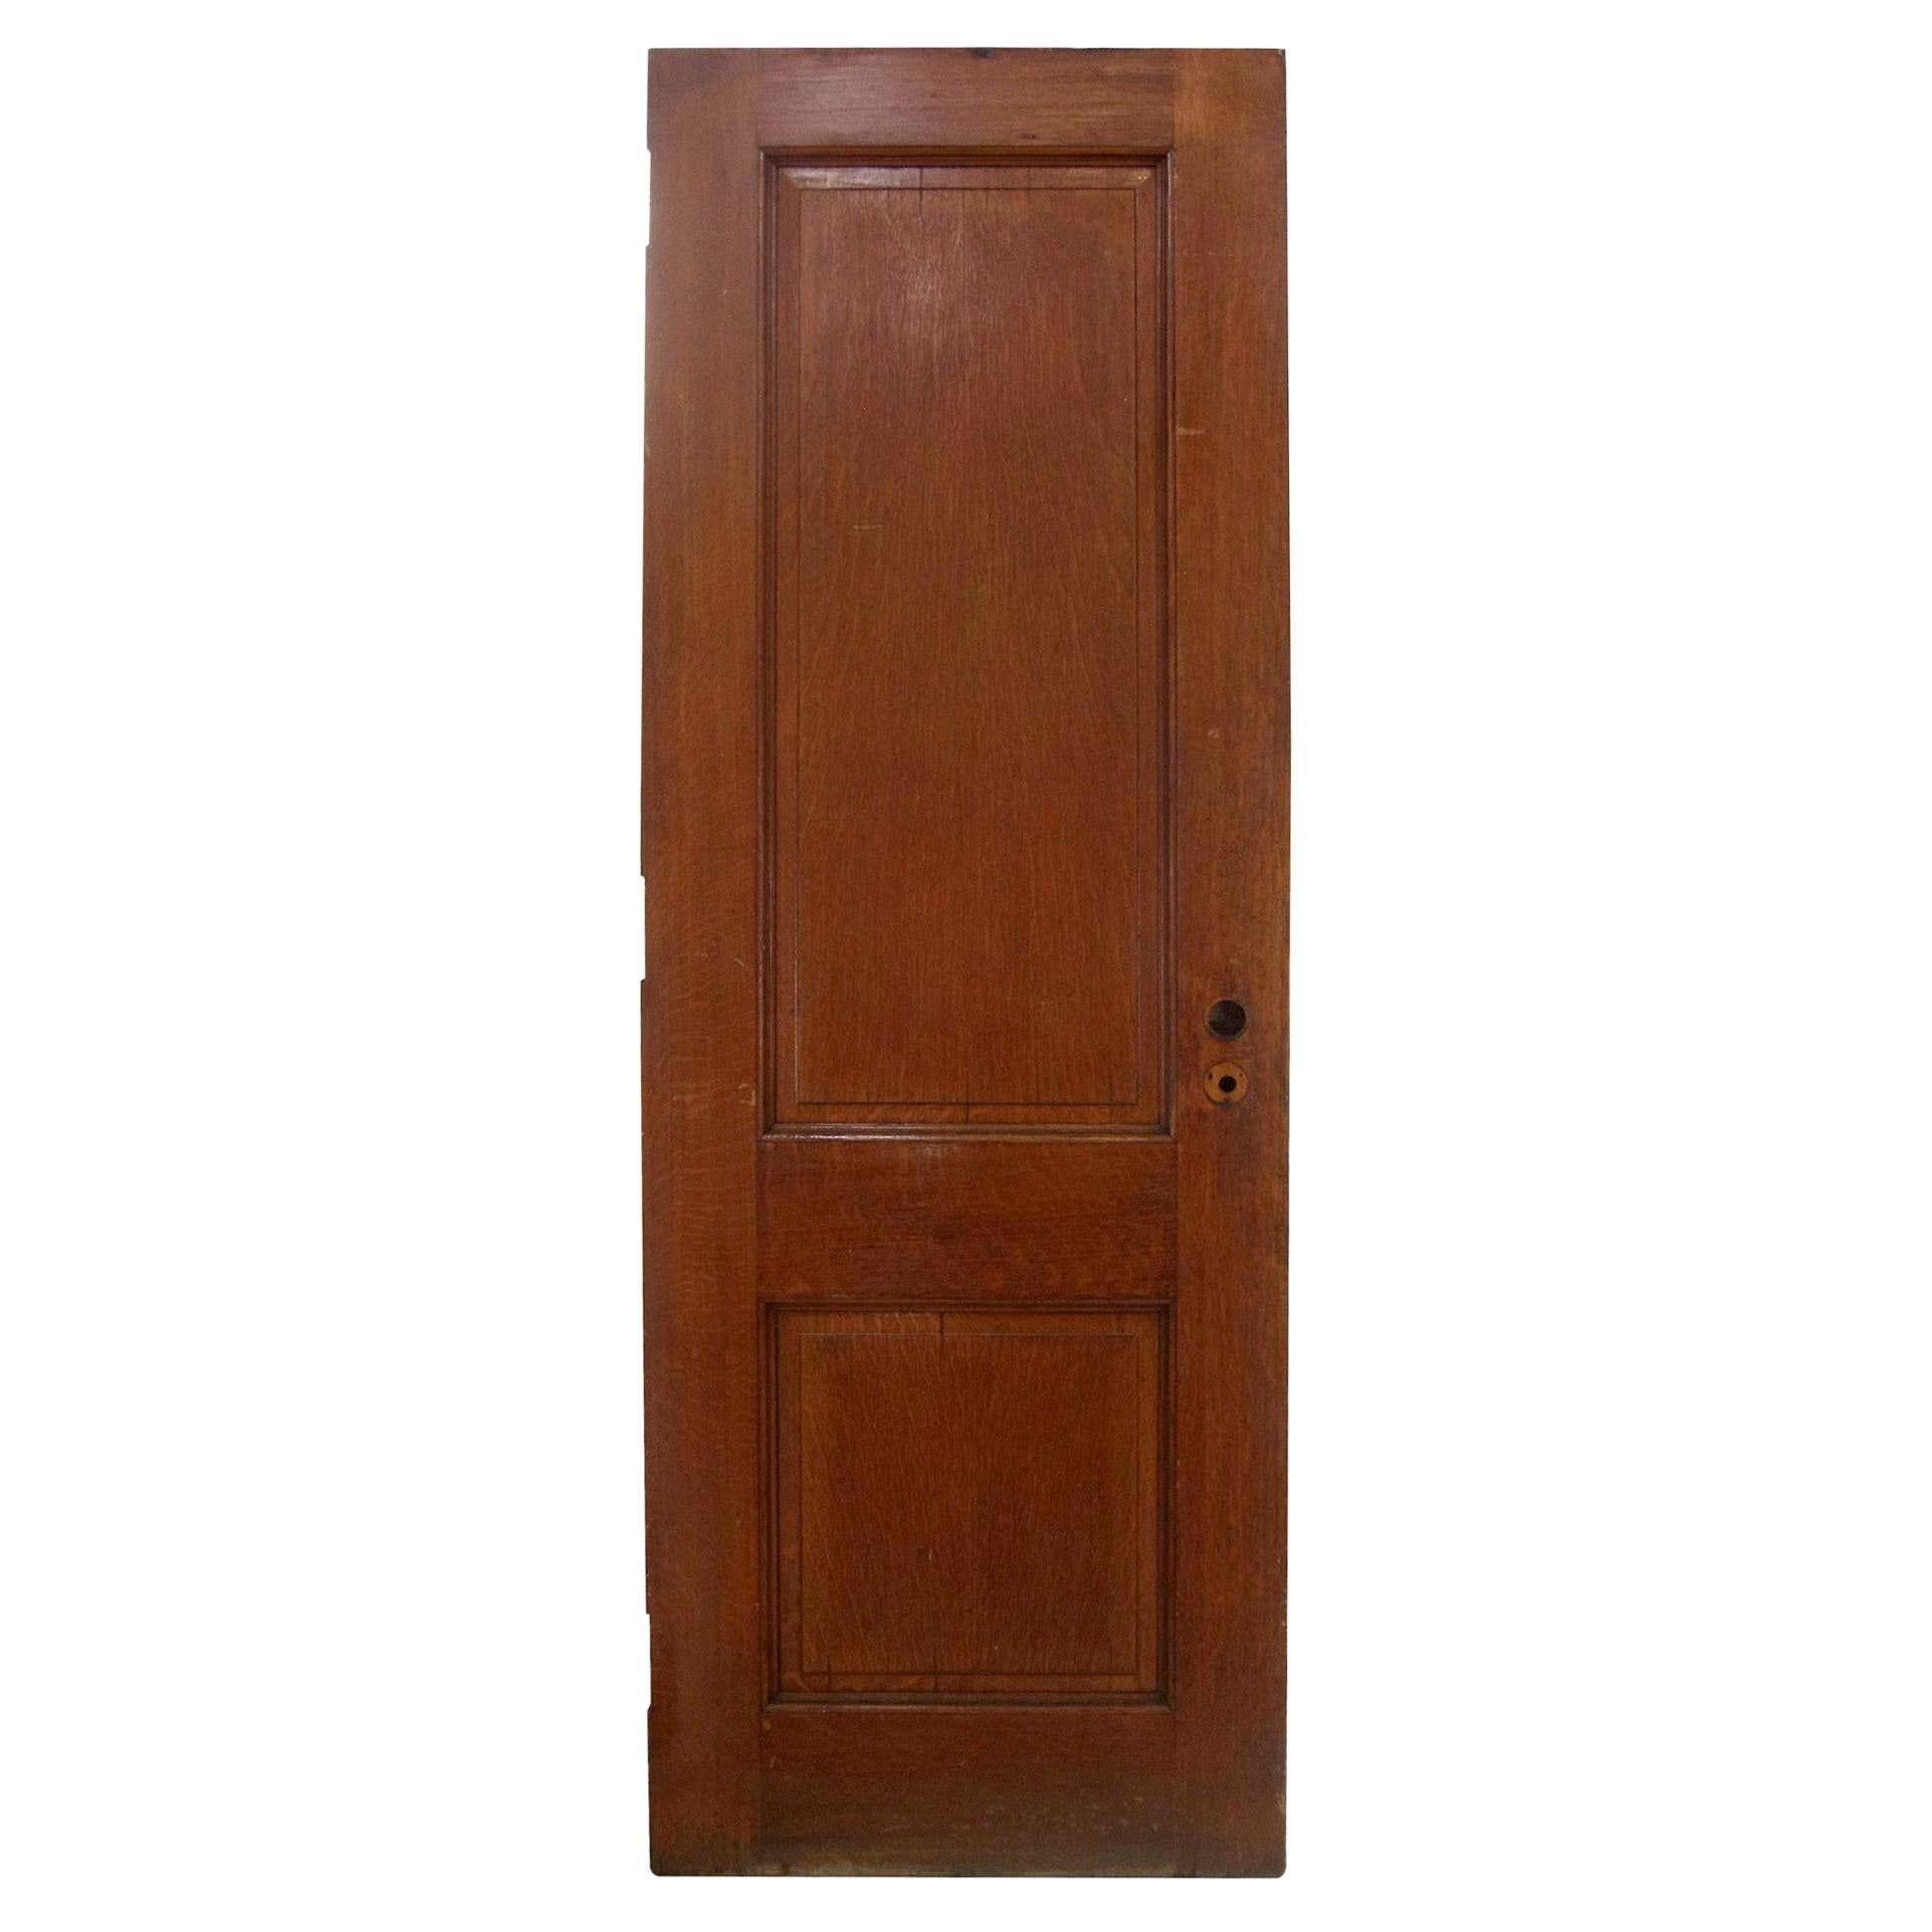 Antique 2 Panel Quarter Sawn Oak Door in a Dark Tone